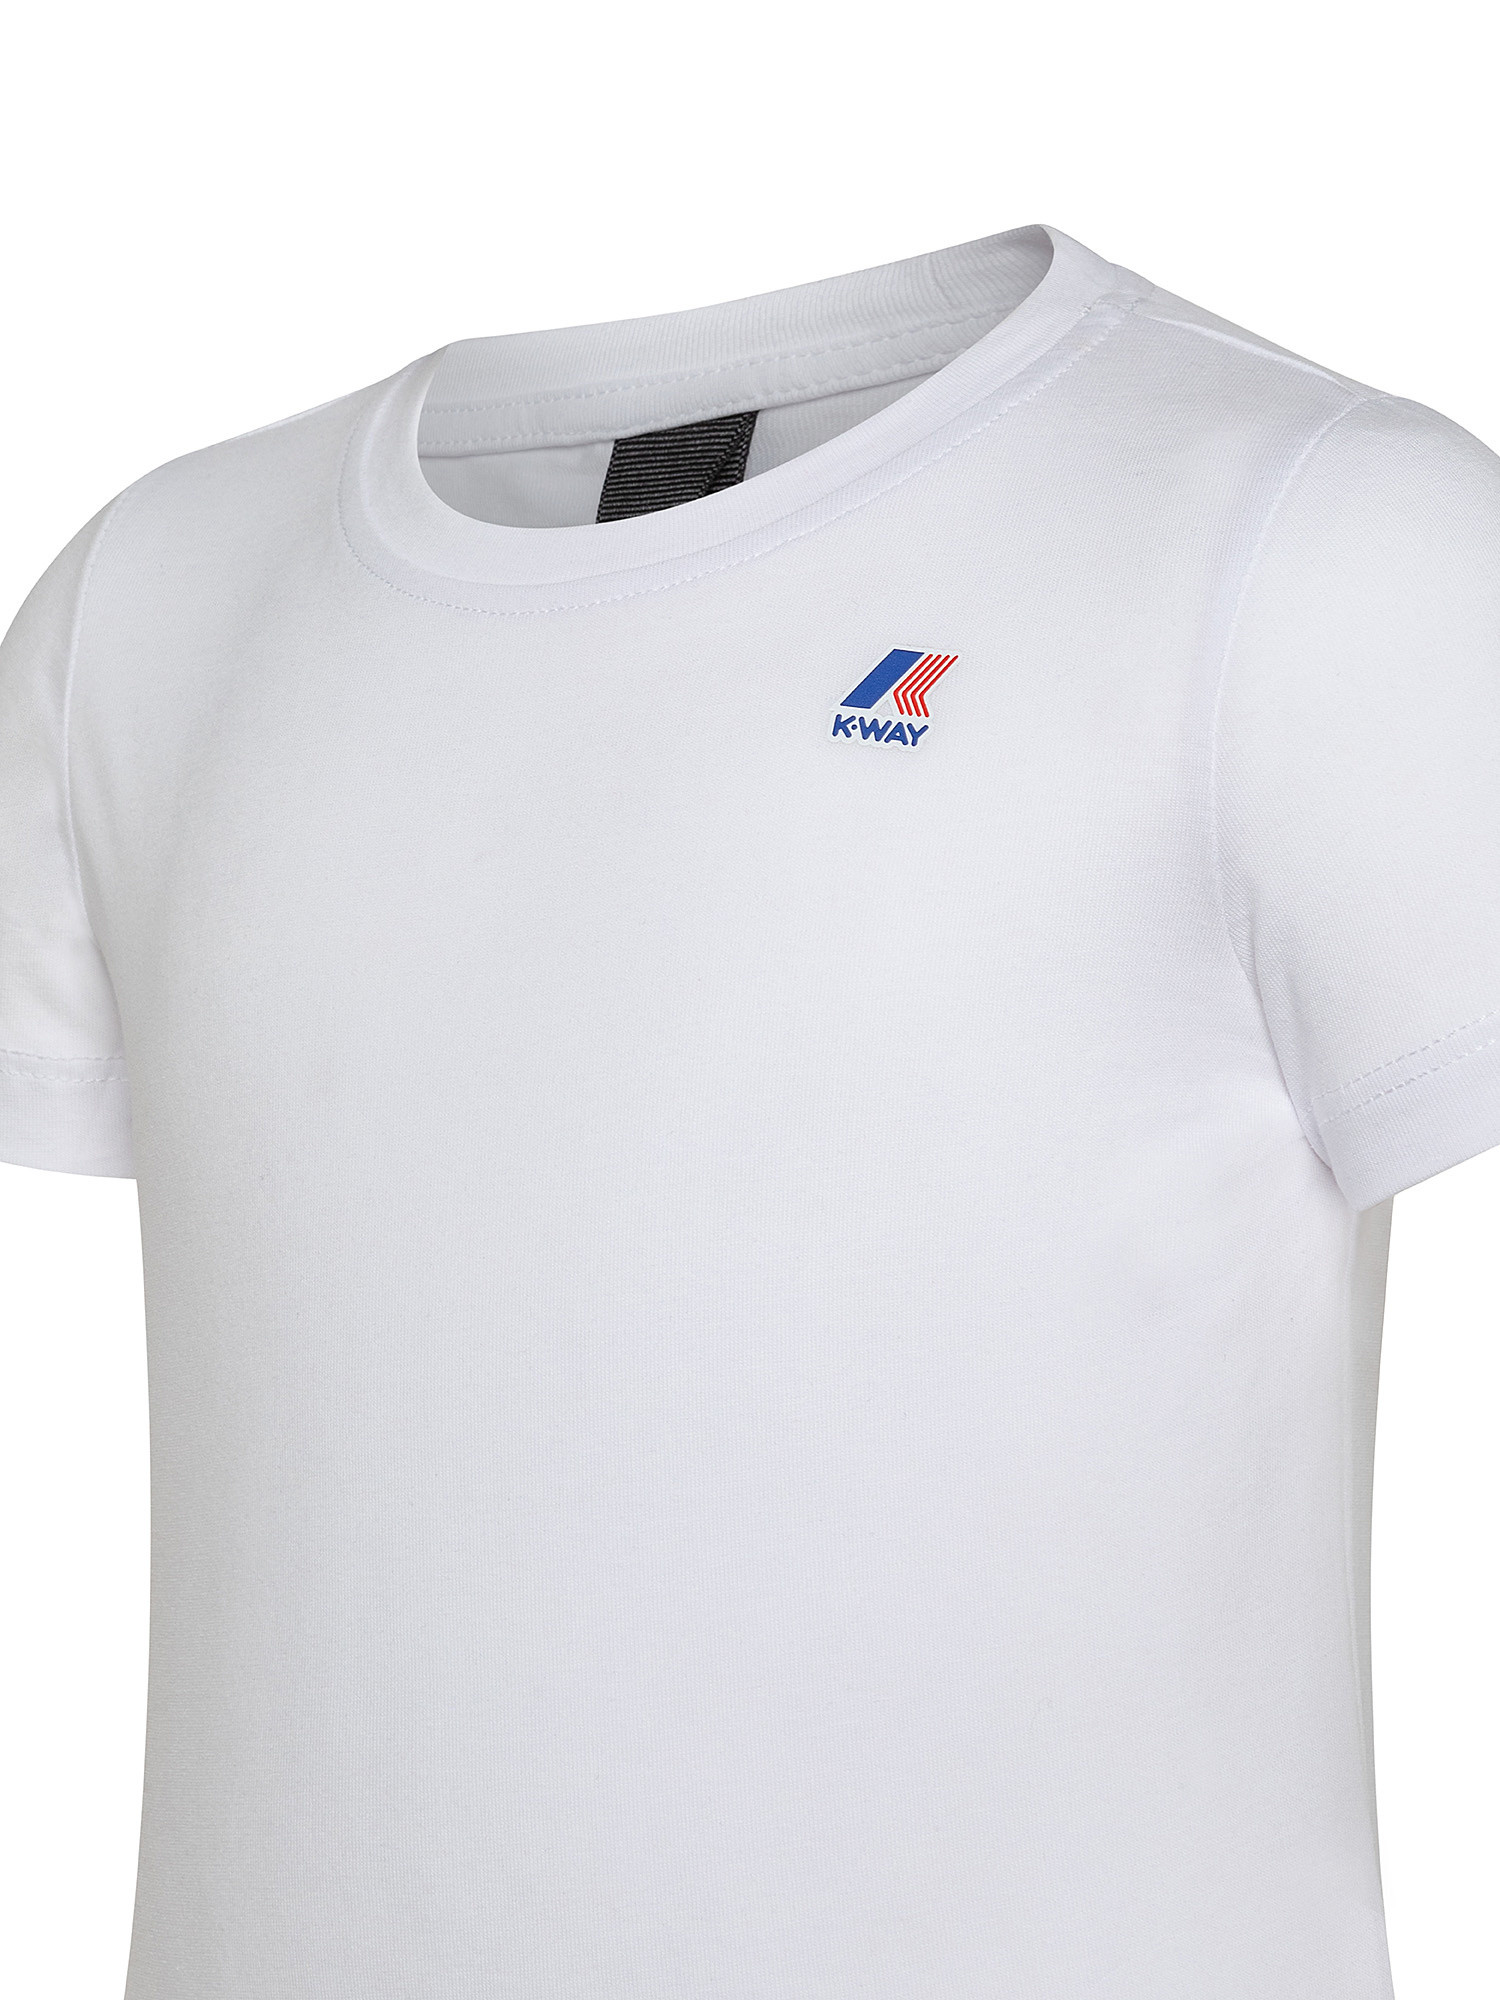 Regular fit boy's T-shirt, White, large image number 2